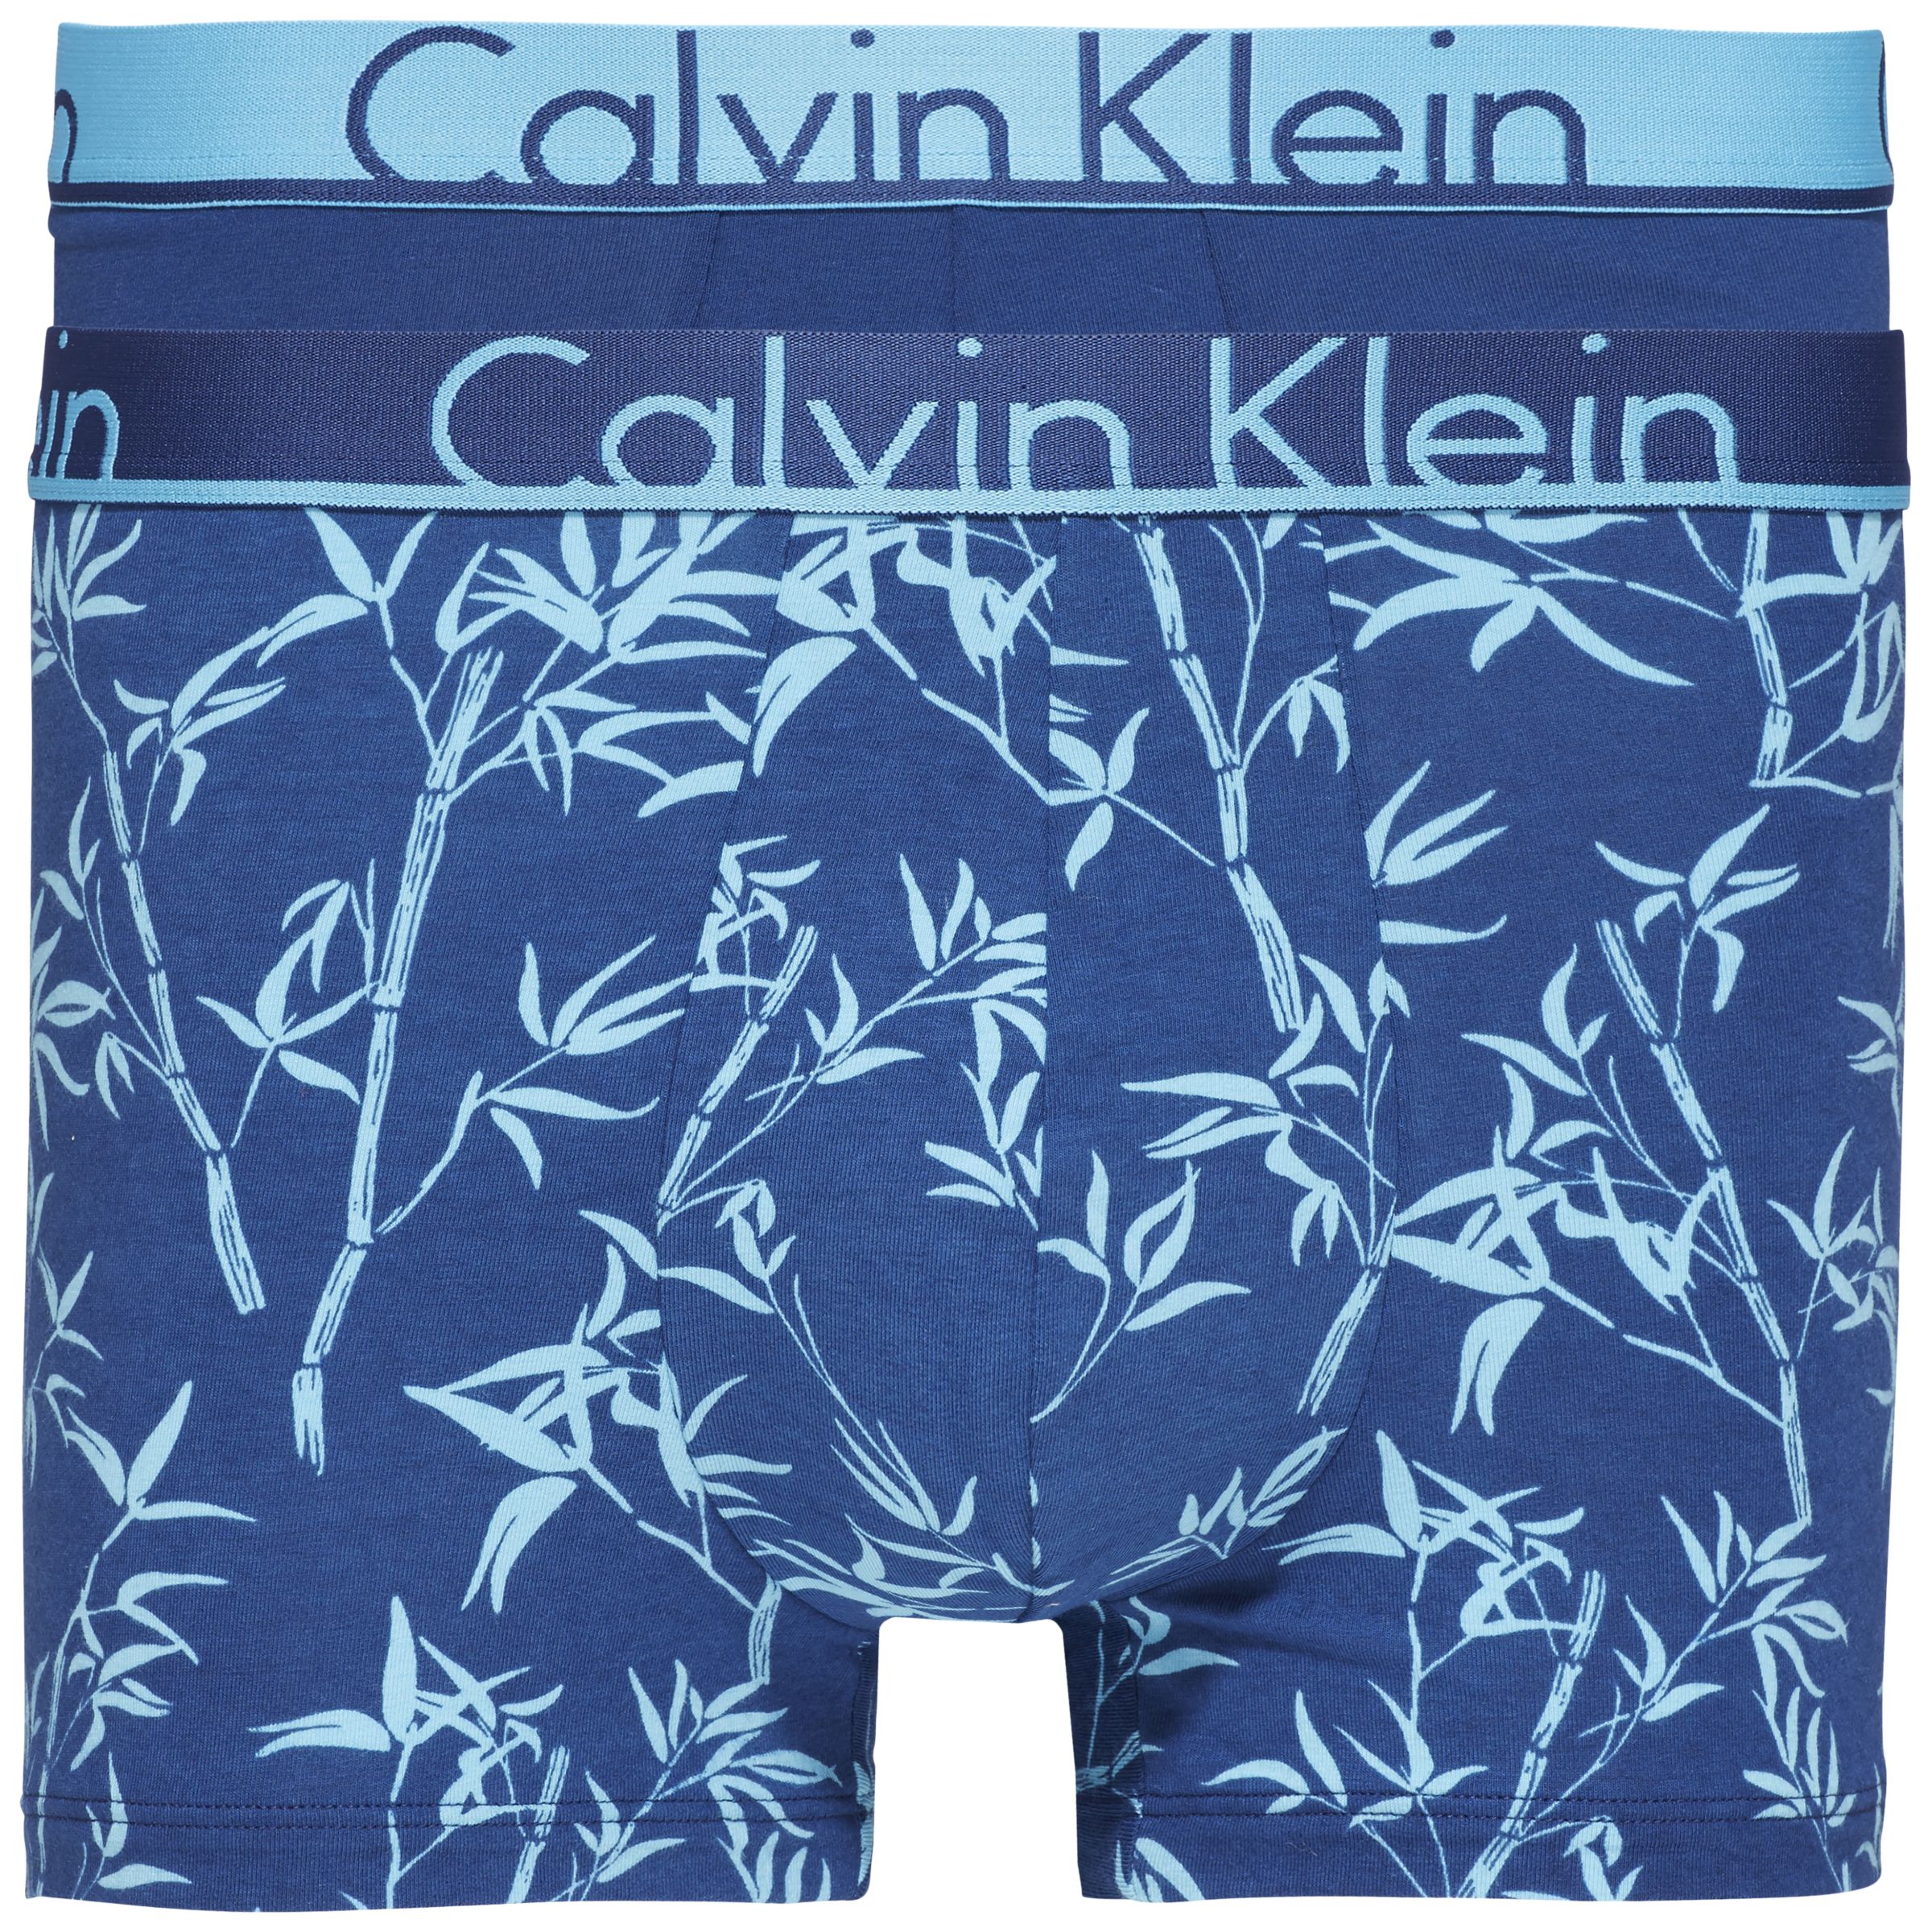 Calvin Klein ID Bamboo Print Trunks, Pack of 2, Blue